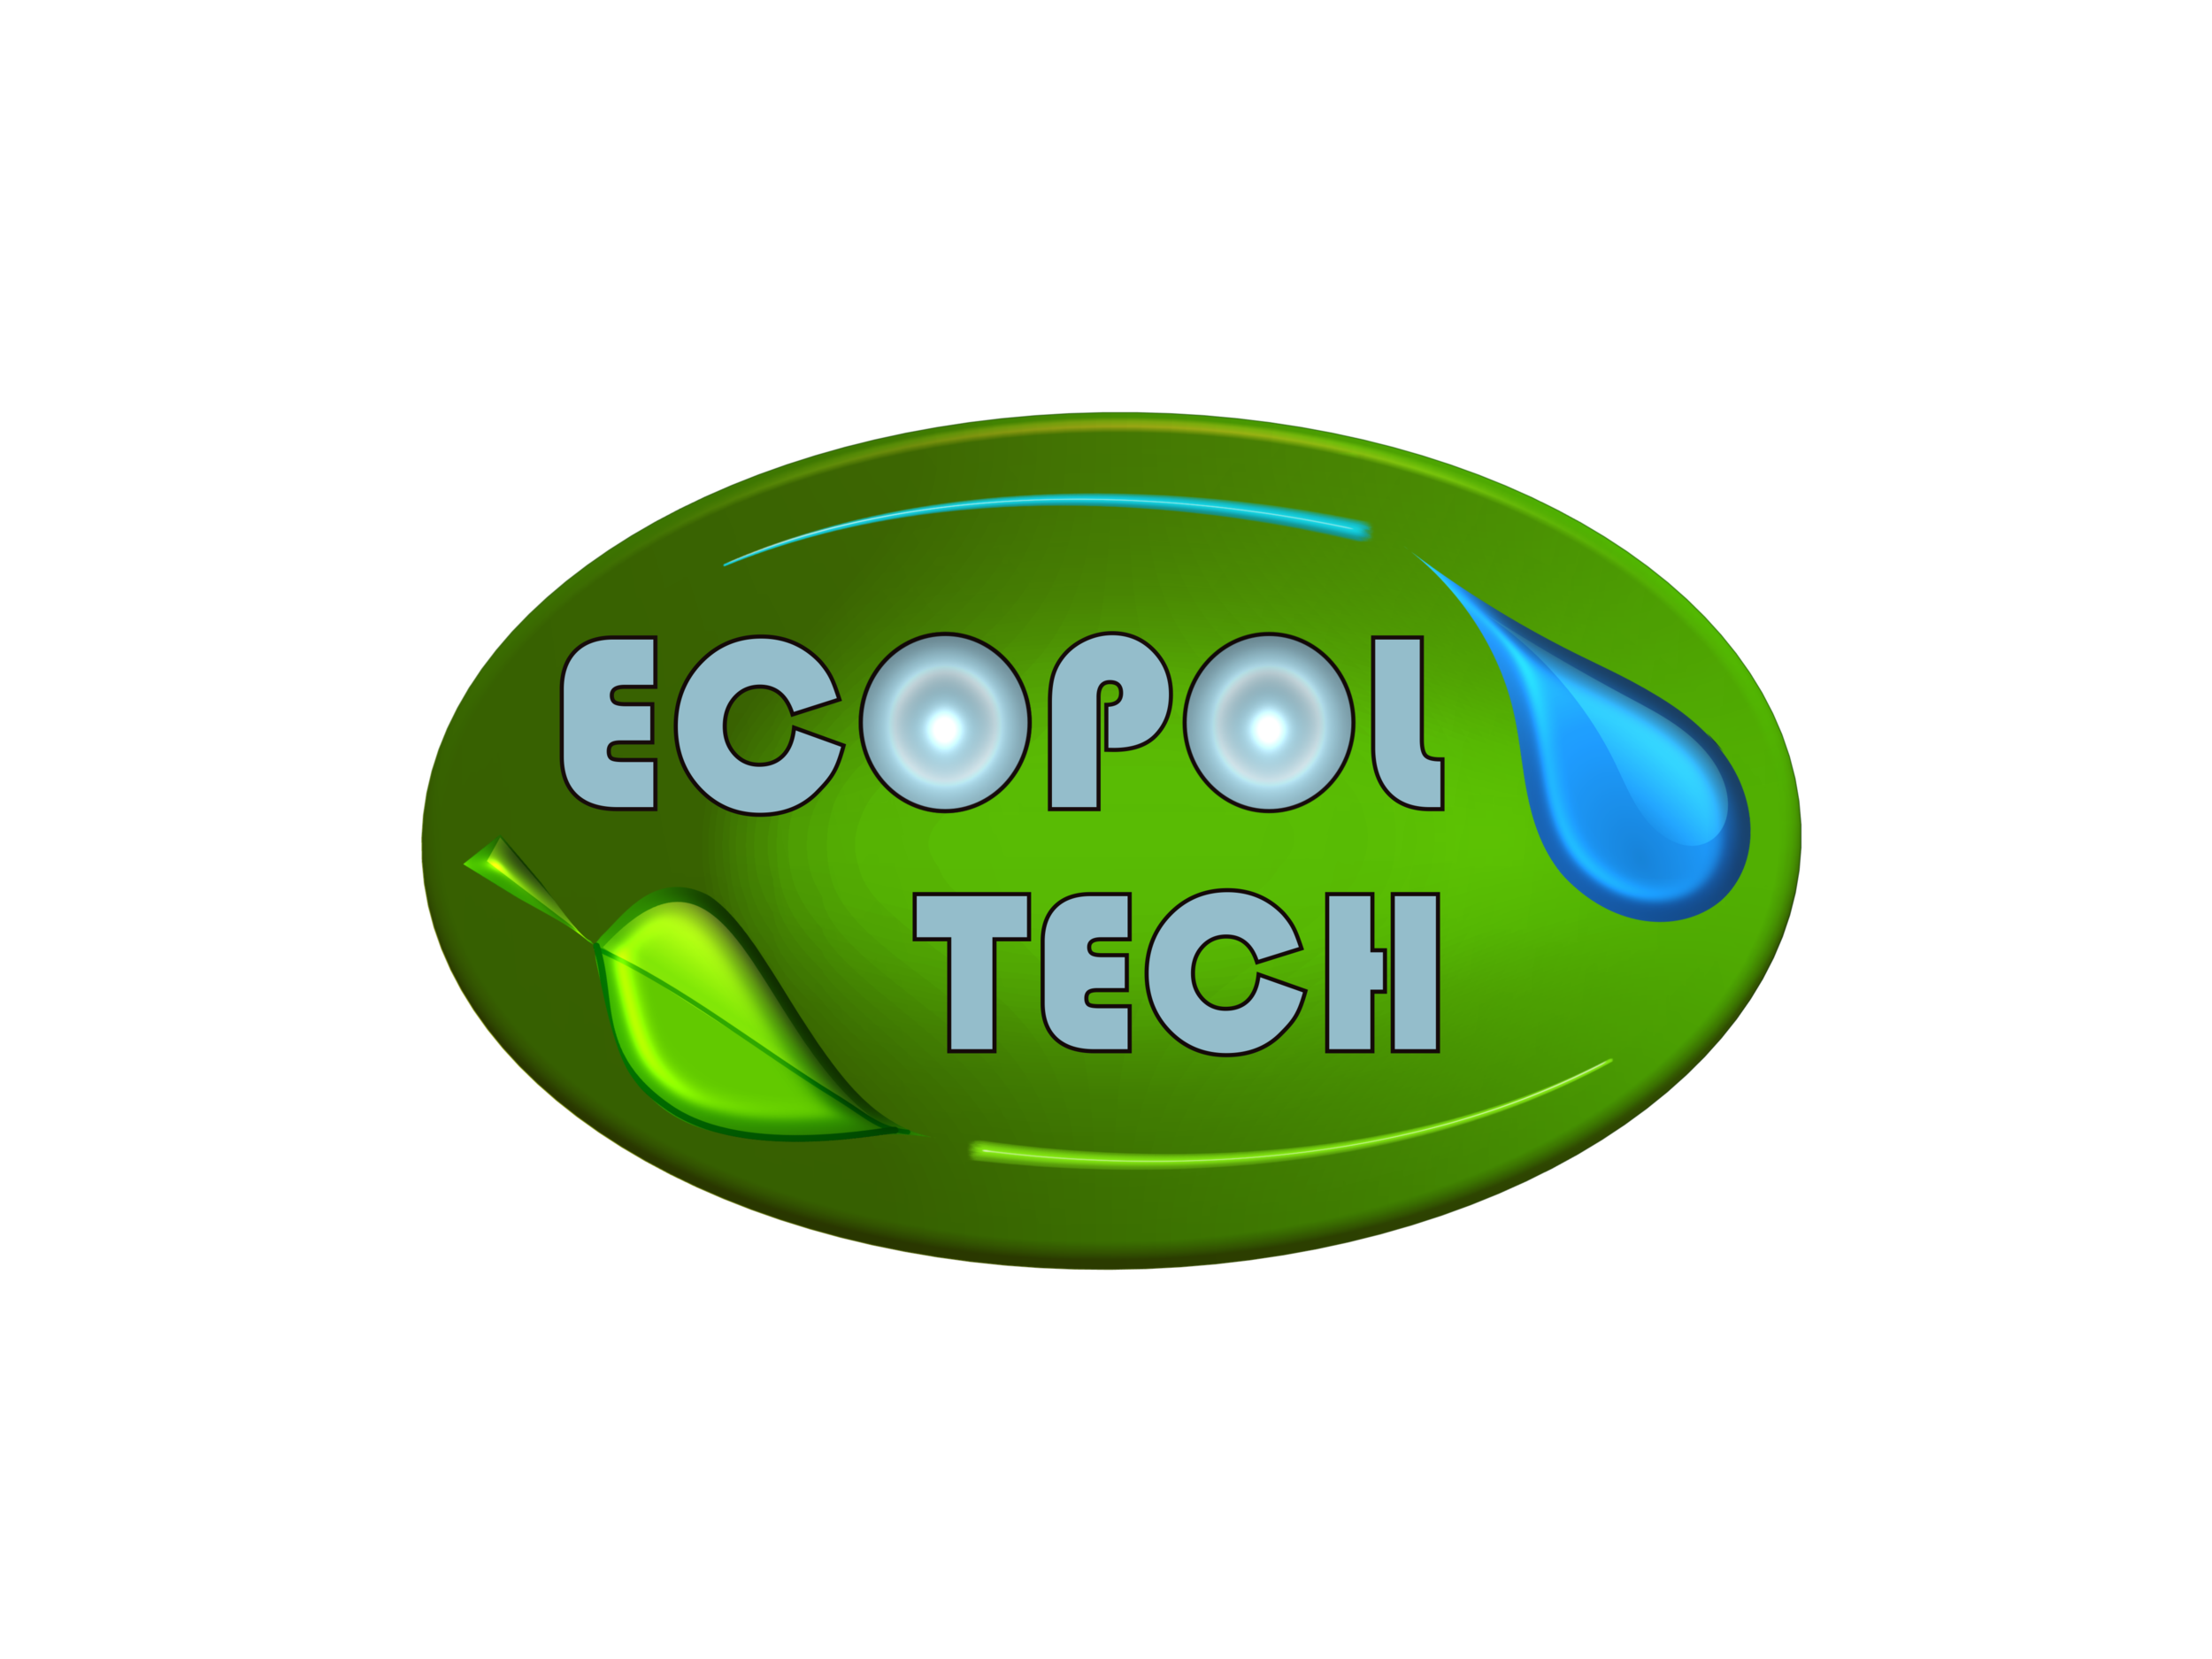 1_Ecopol+Tech-high+res.png